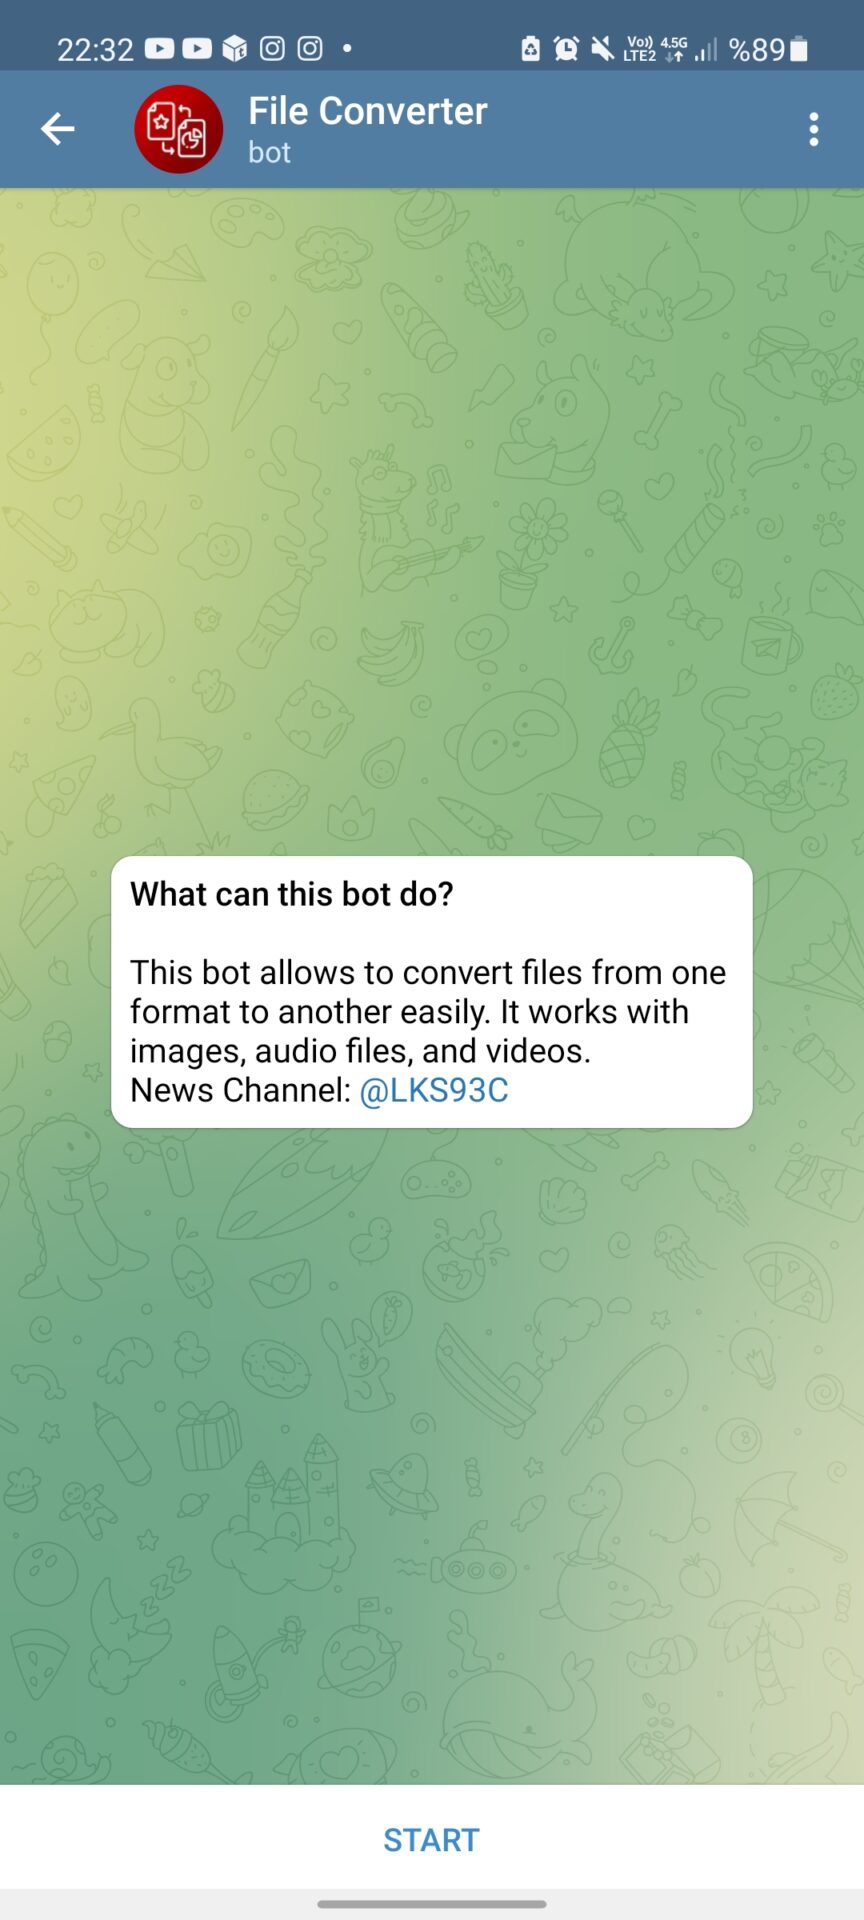 File Converter Bot